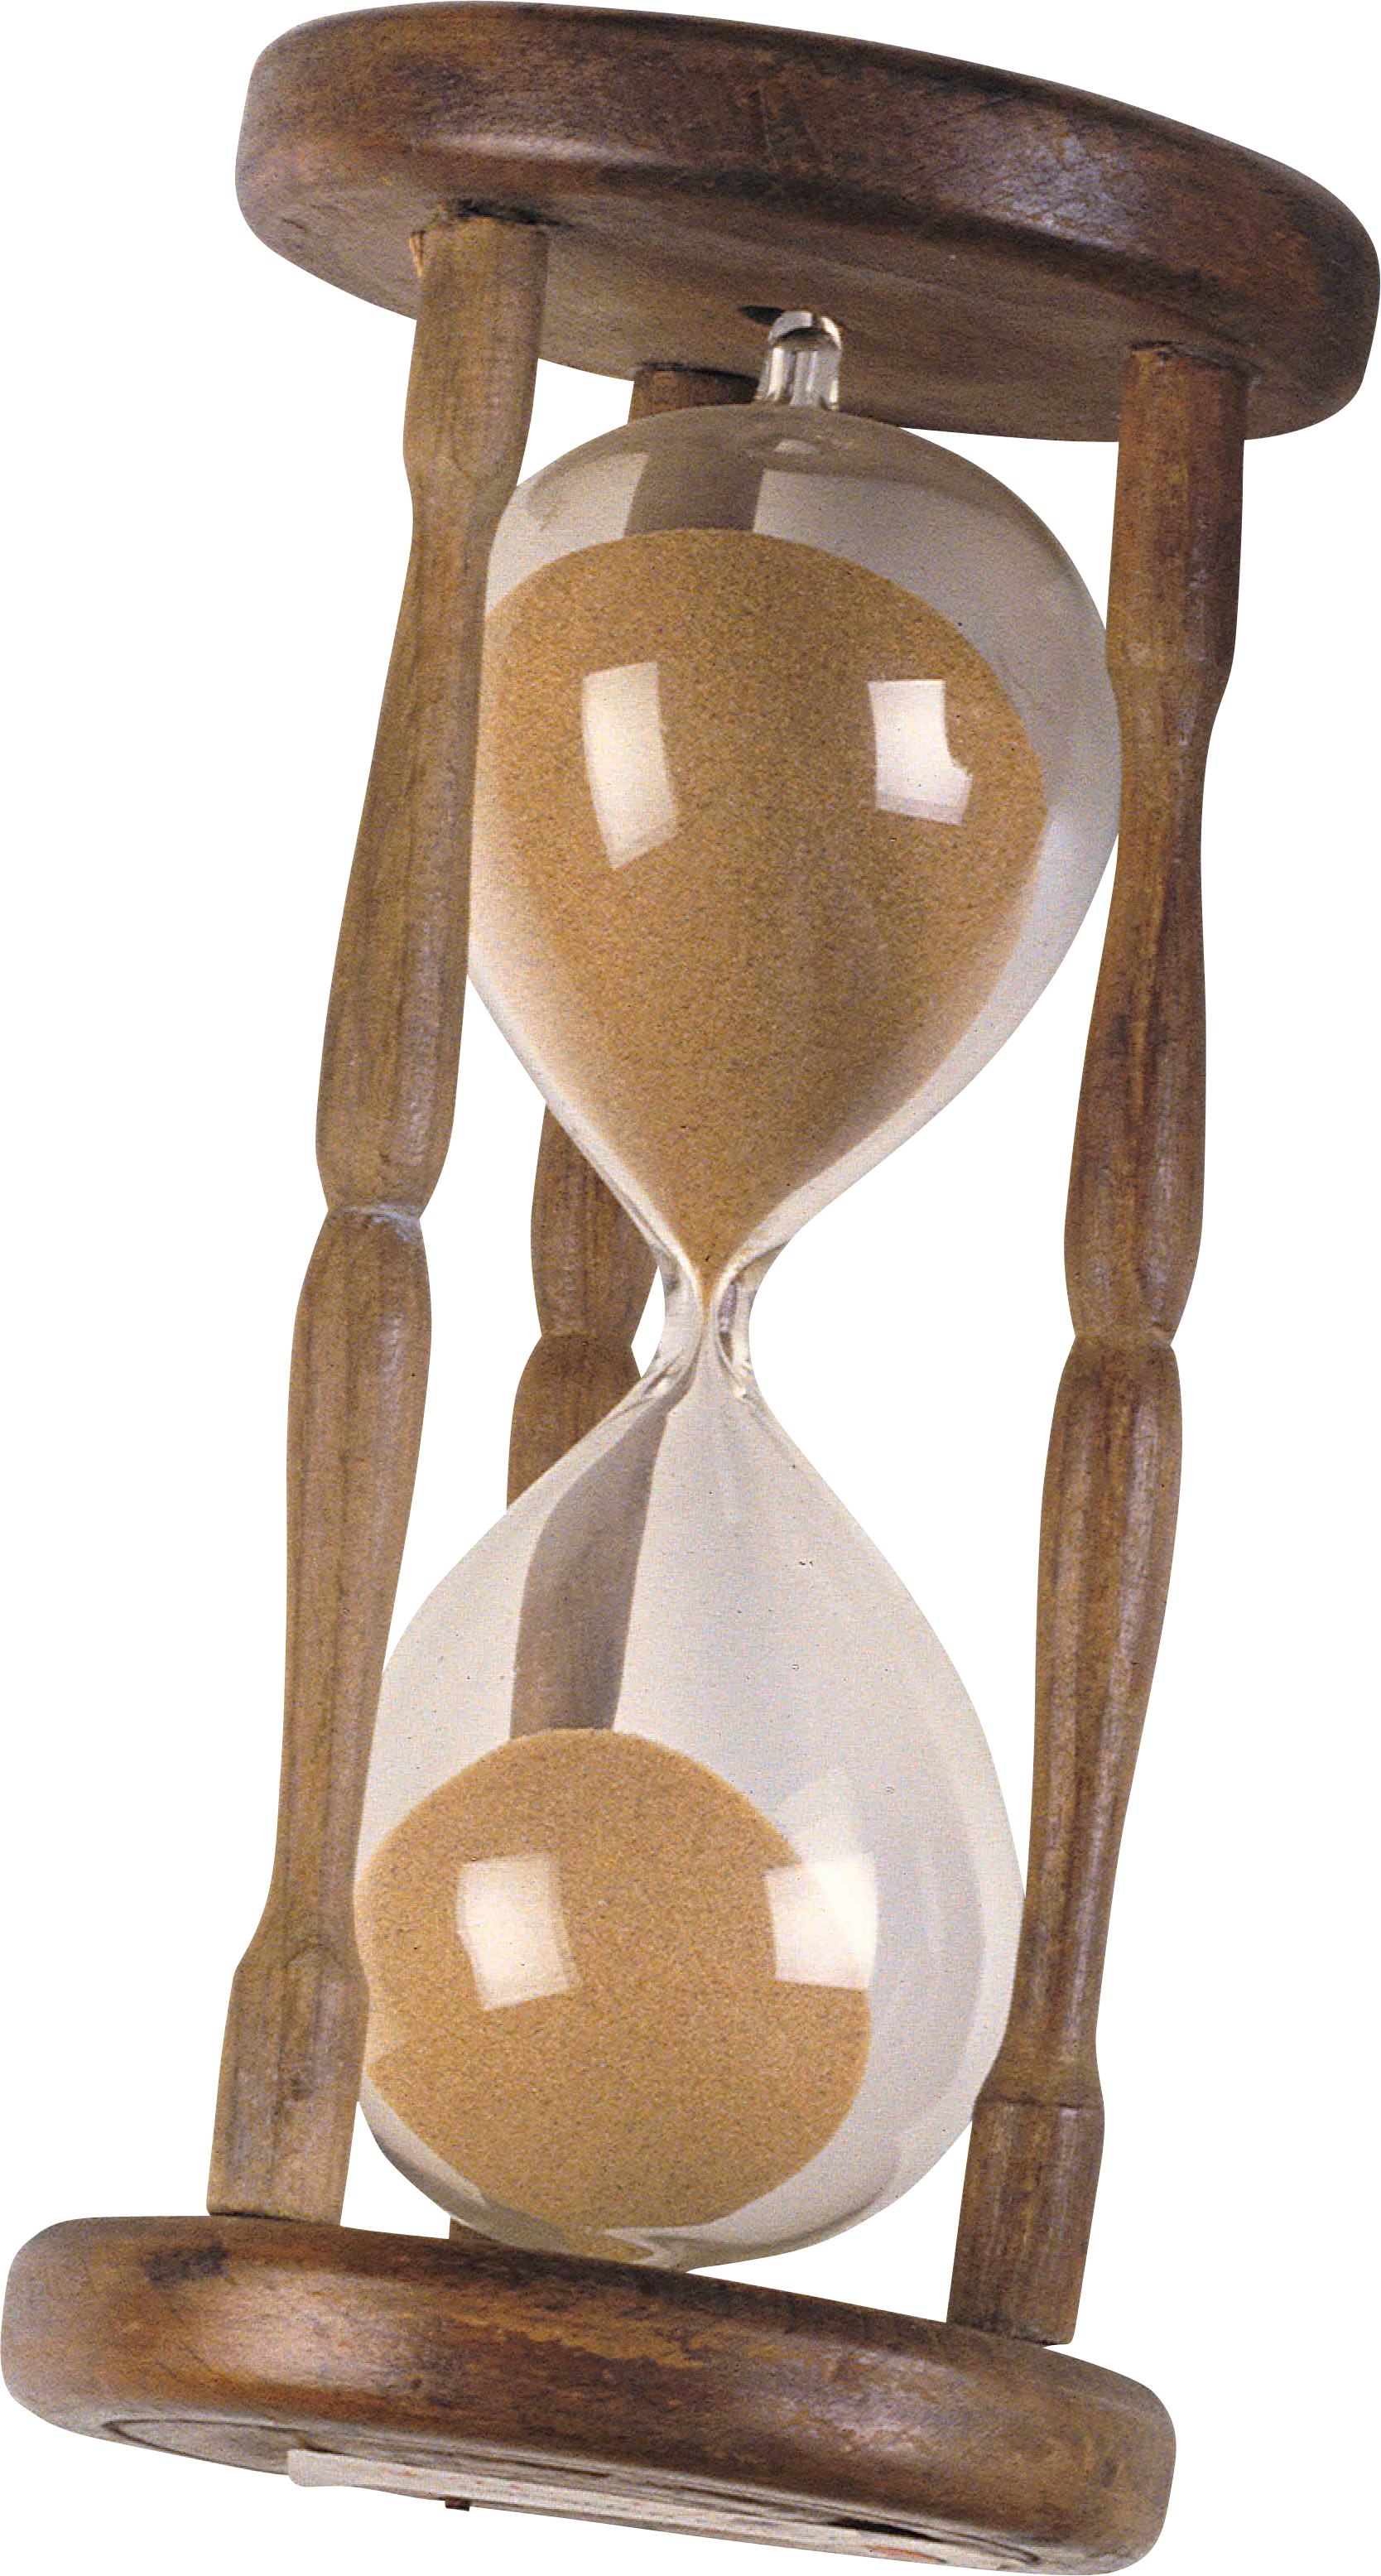 Hourglass - Wikipedia